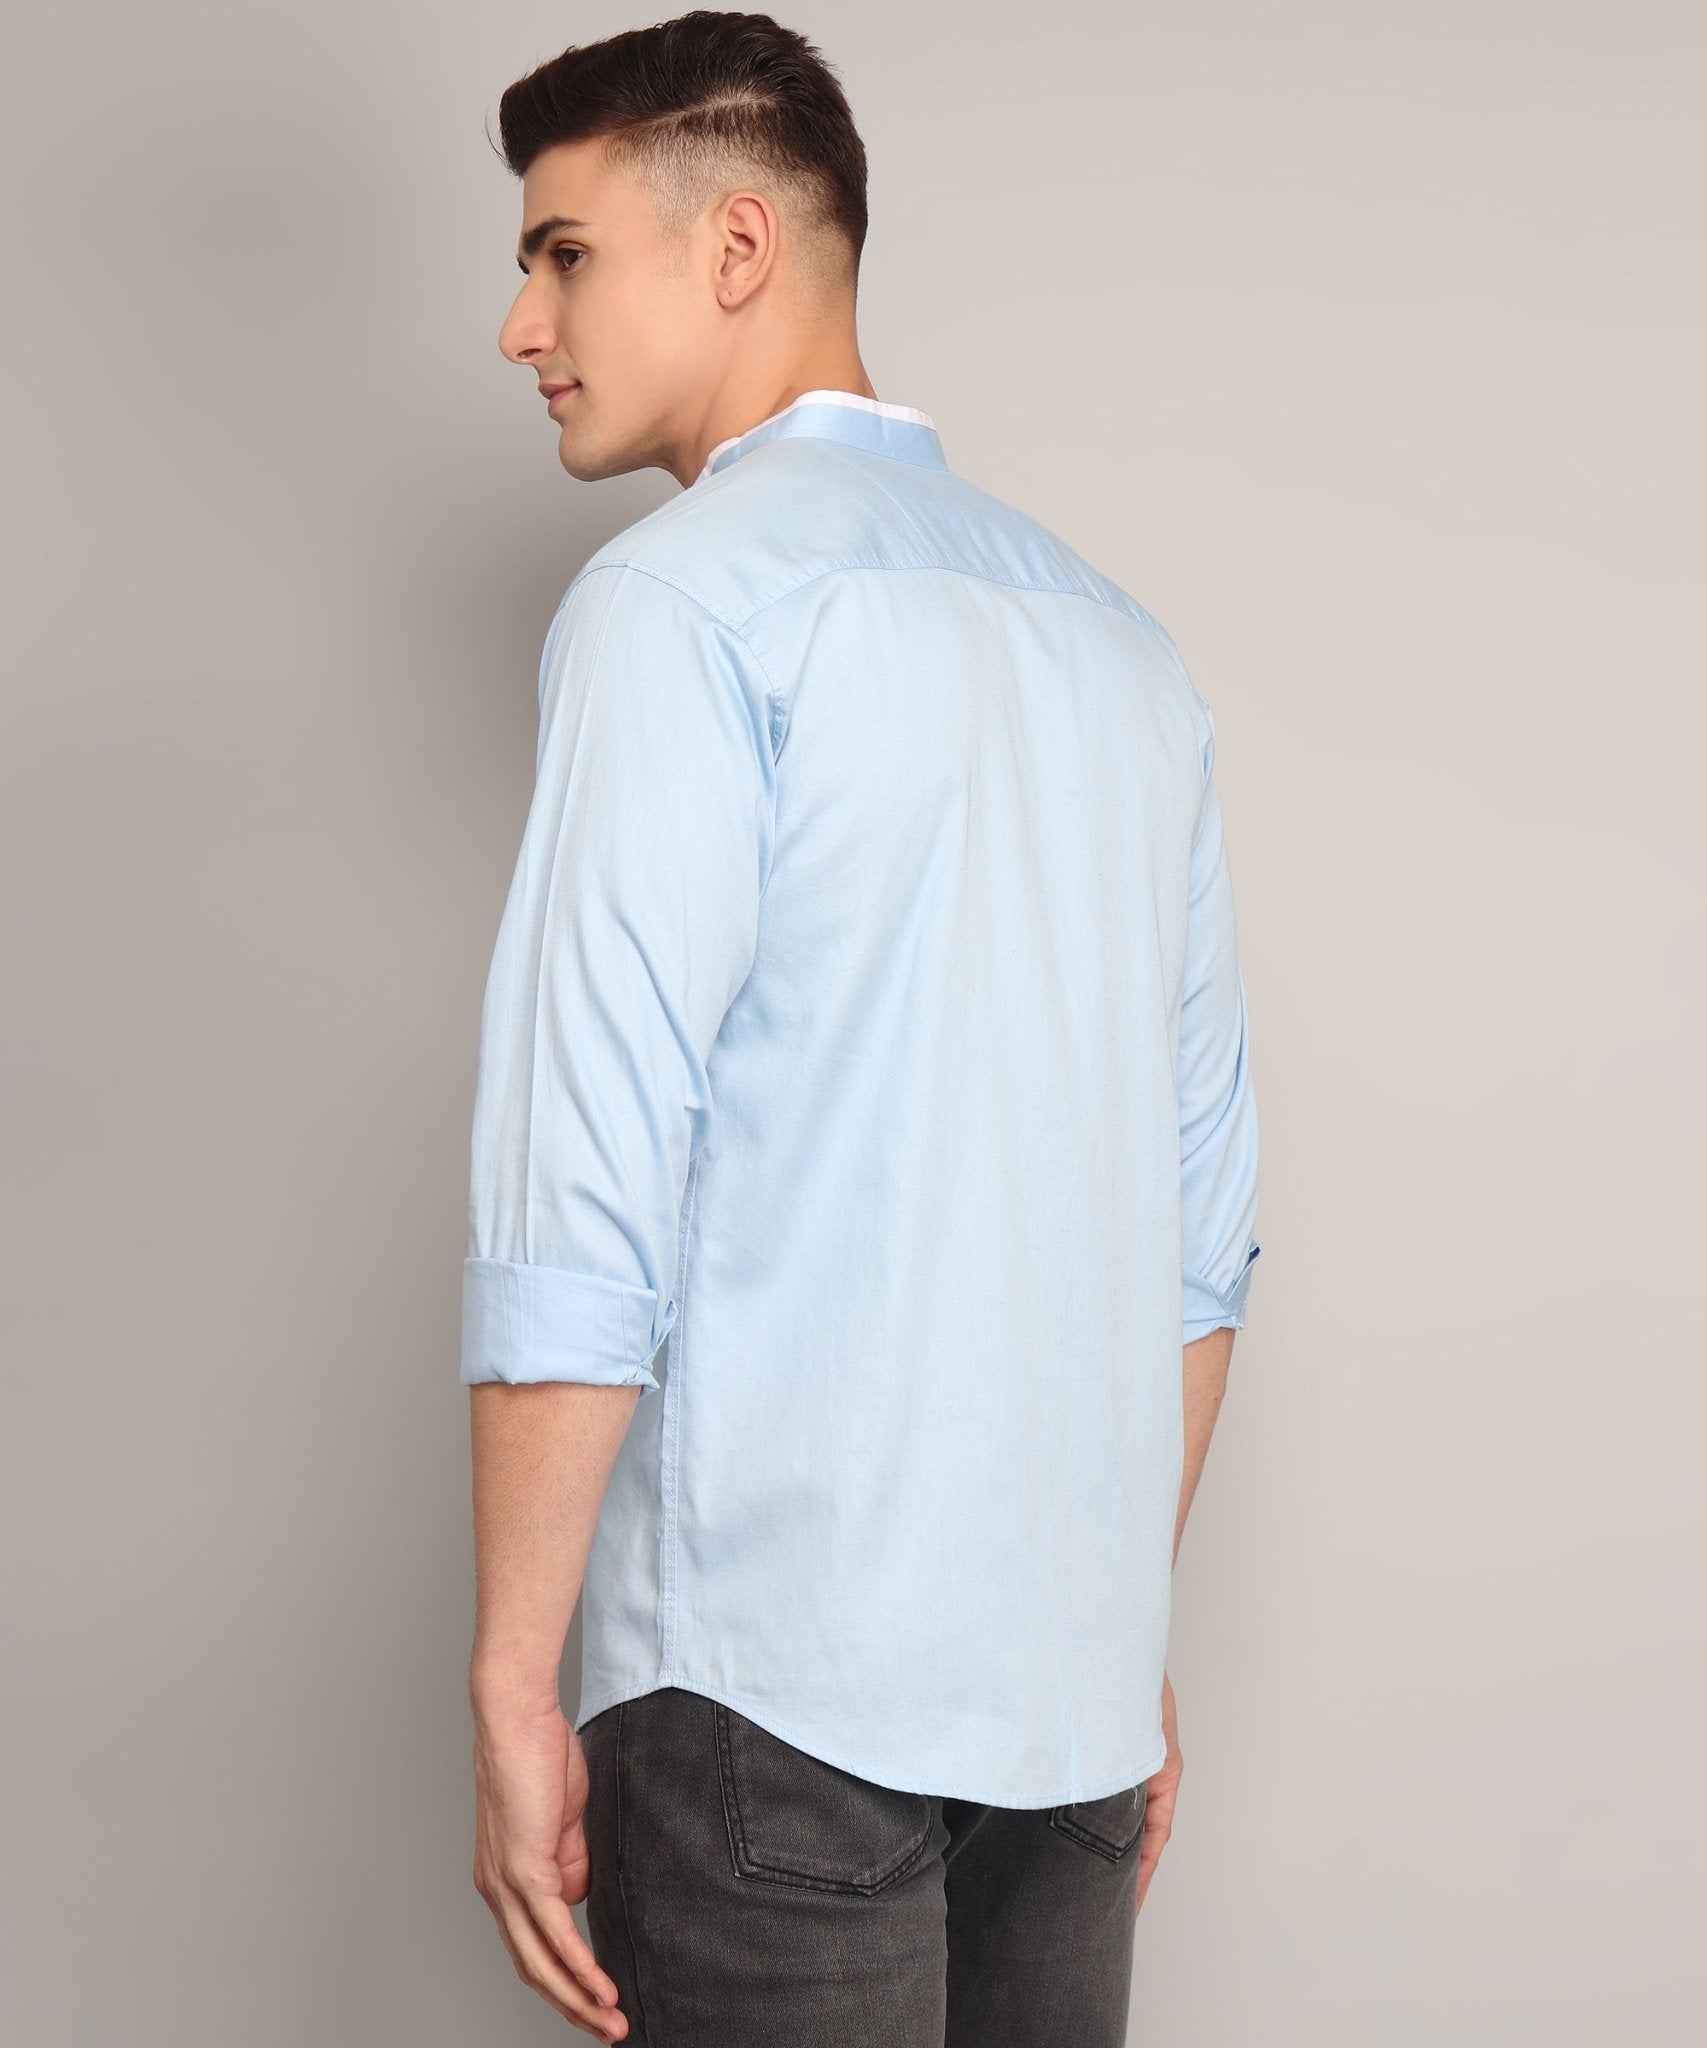 TryBuy Premium Fashionable Full Sleeves Mandarin Collar Sky Blue Cotton Casual Shirt for Men - TryBuy® USA🇺🇸